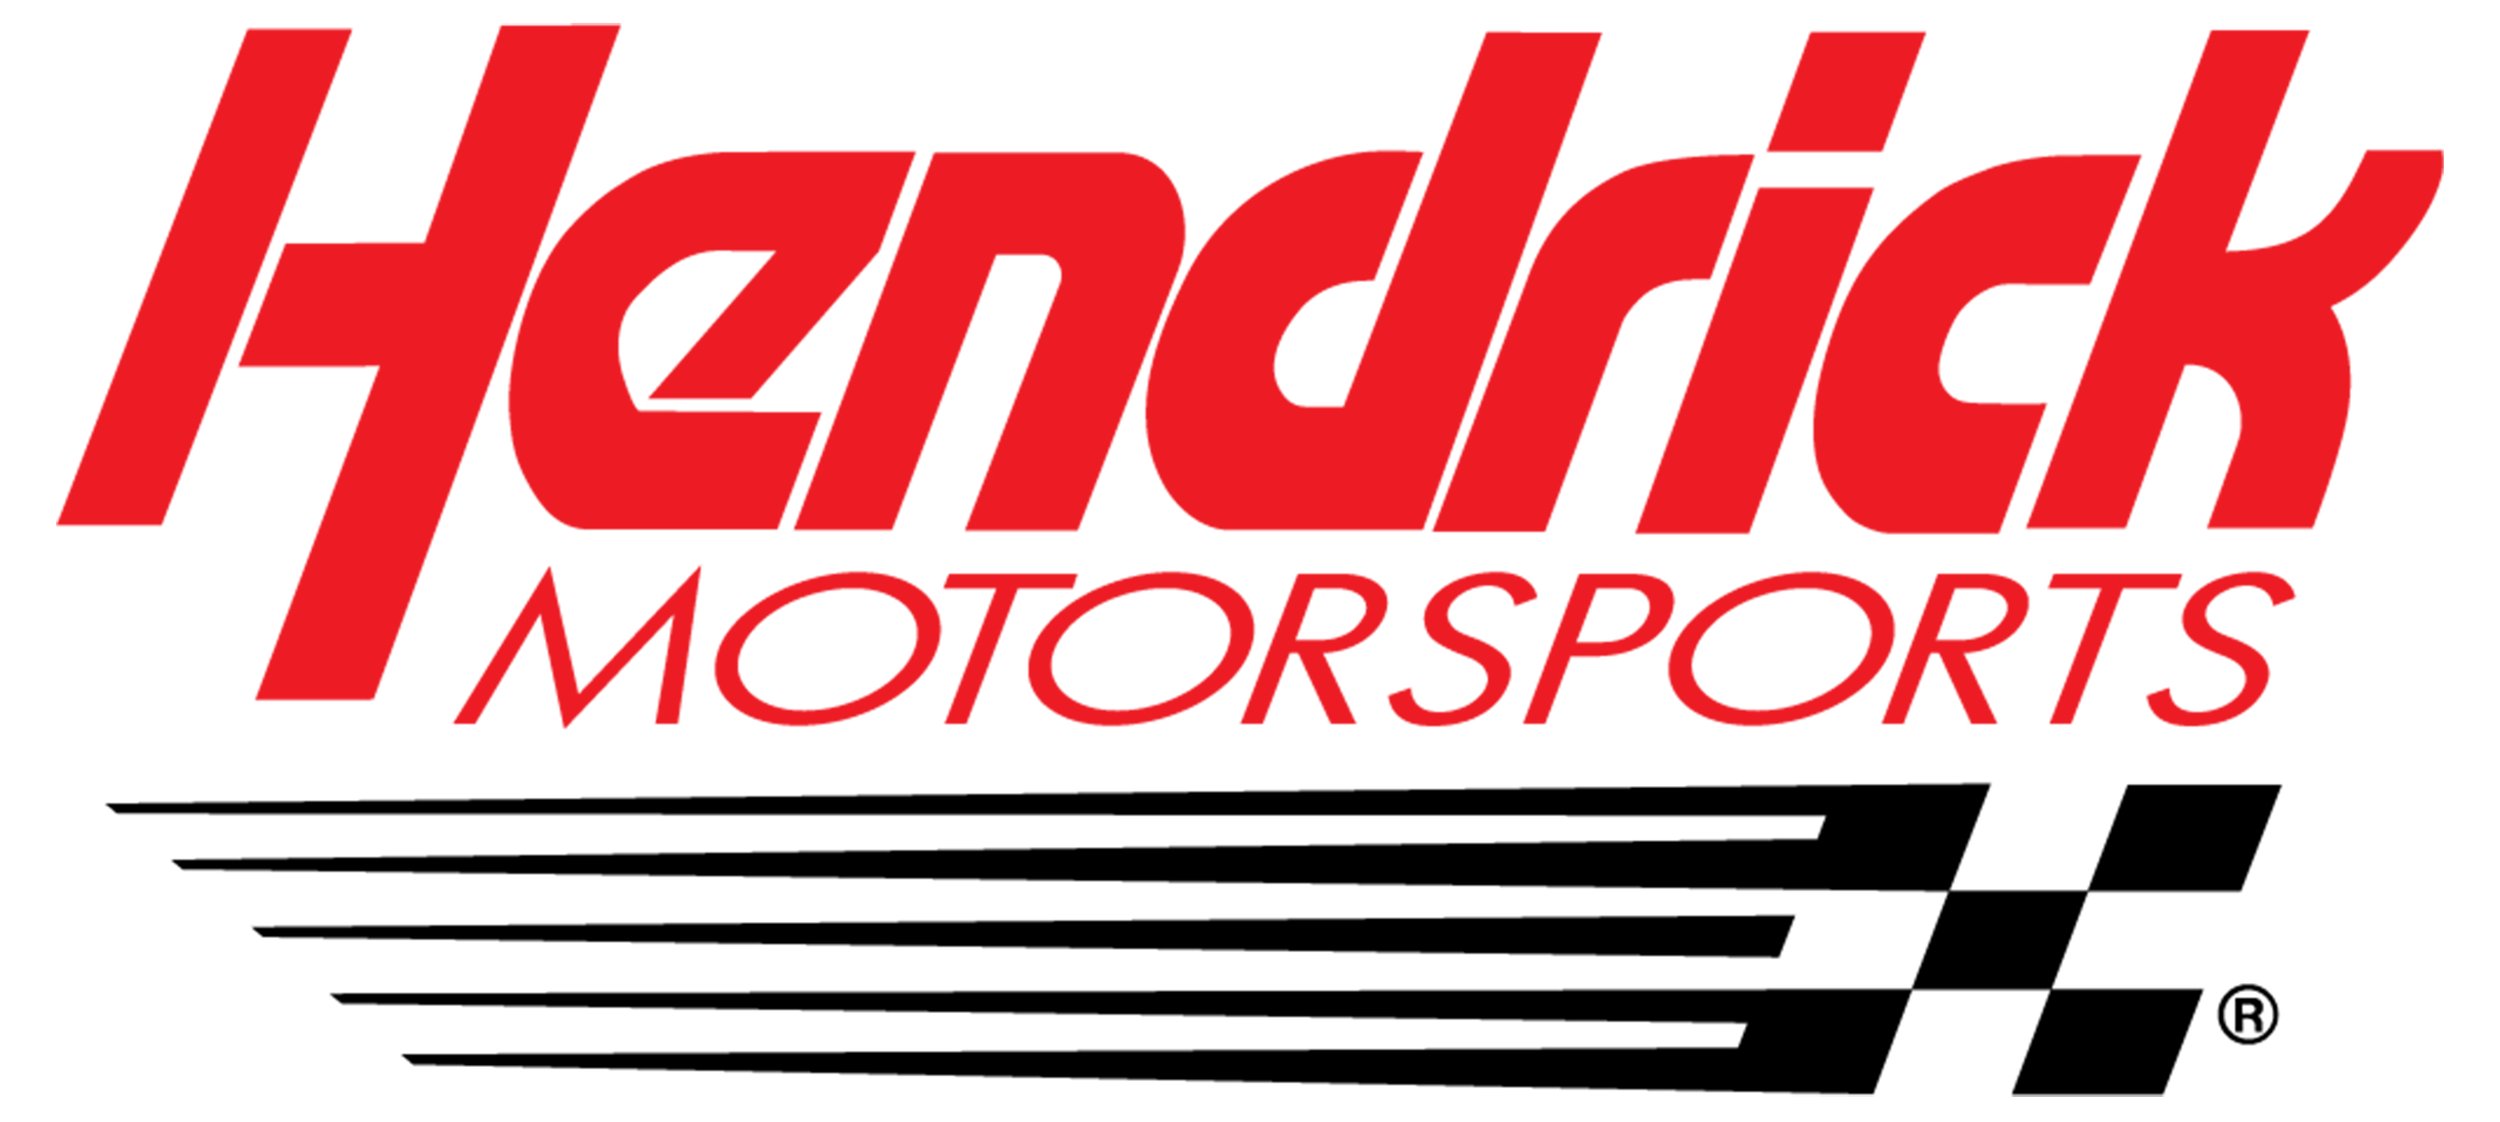 Hendrick Motorsports Color Primary Logo.jpg